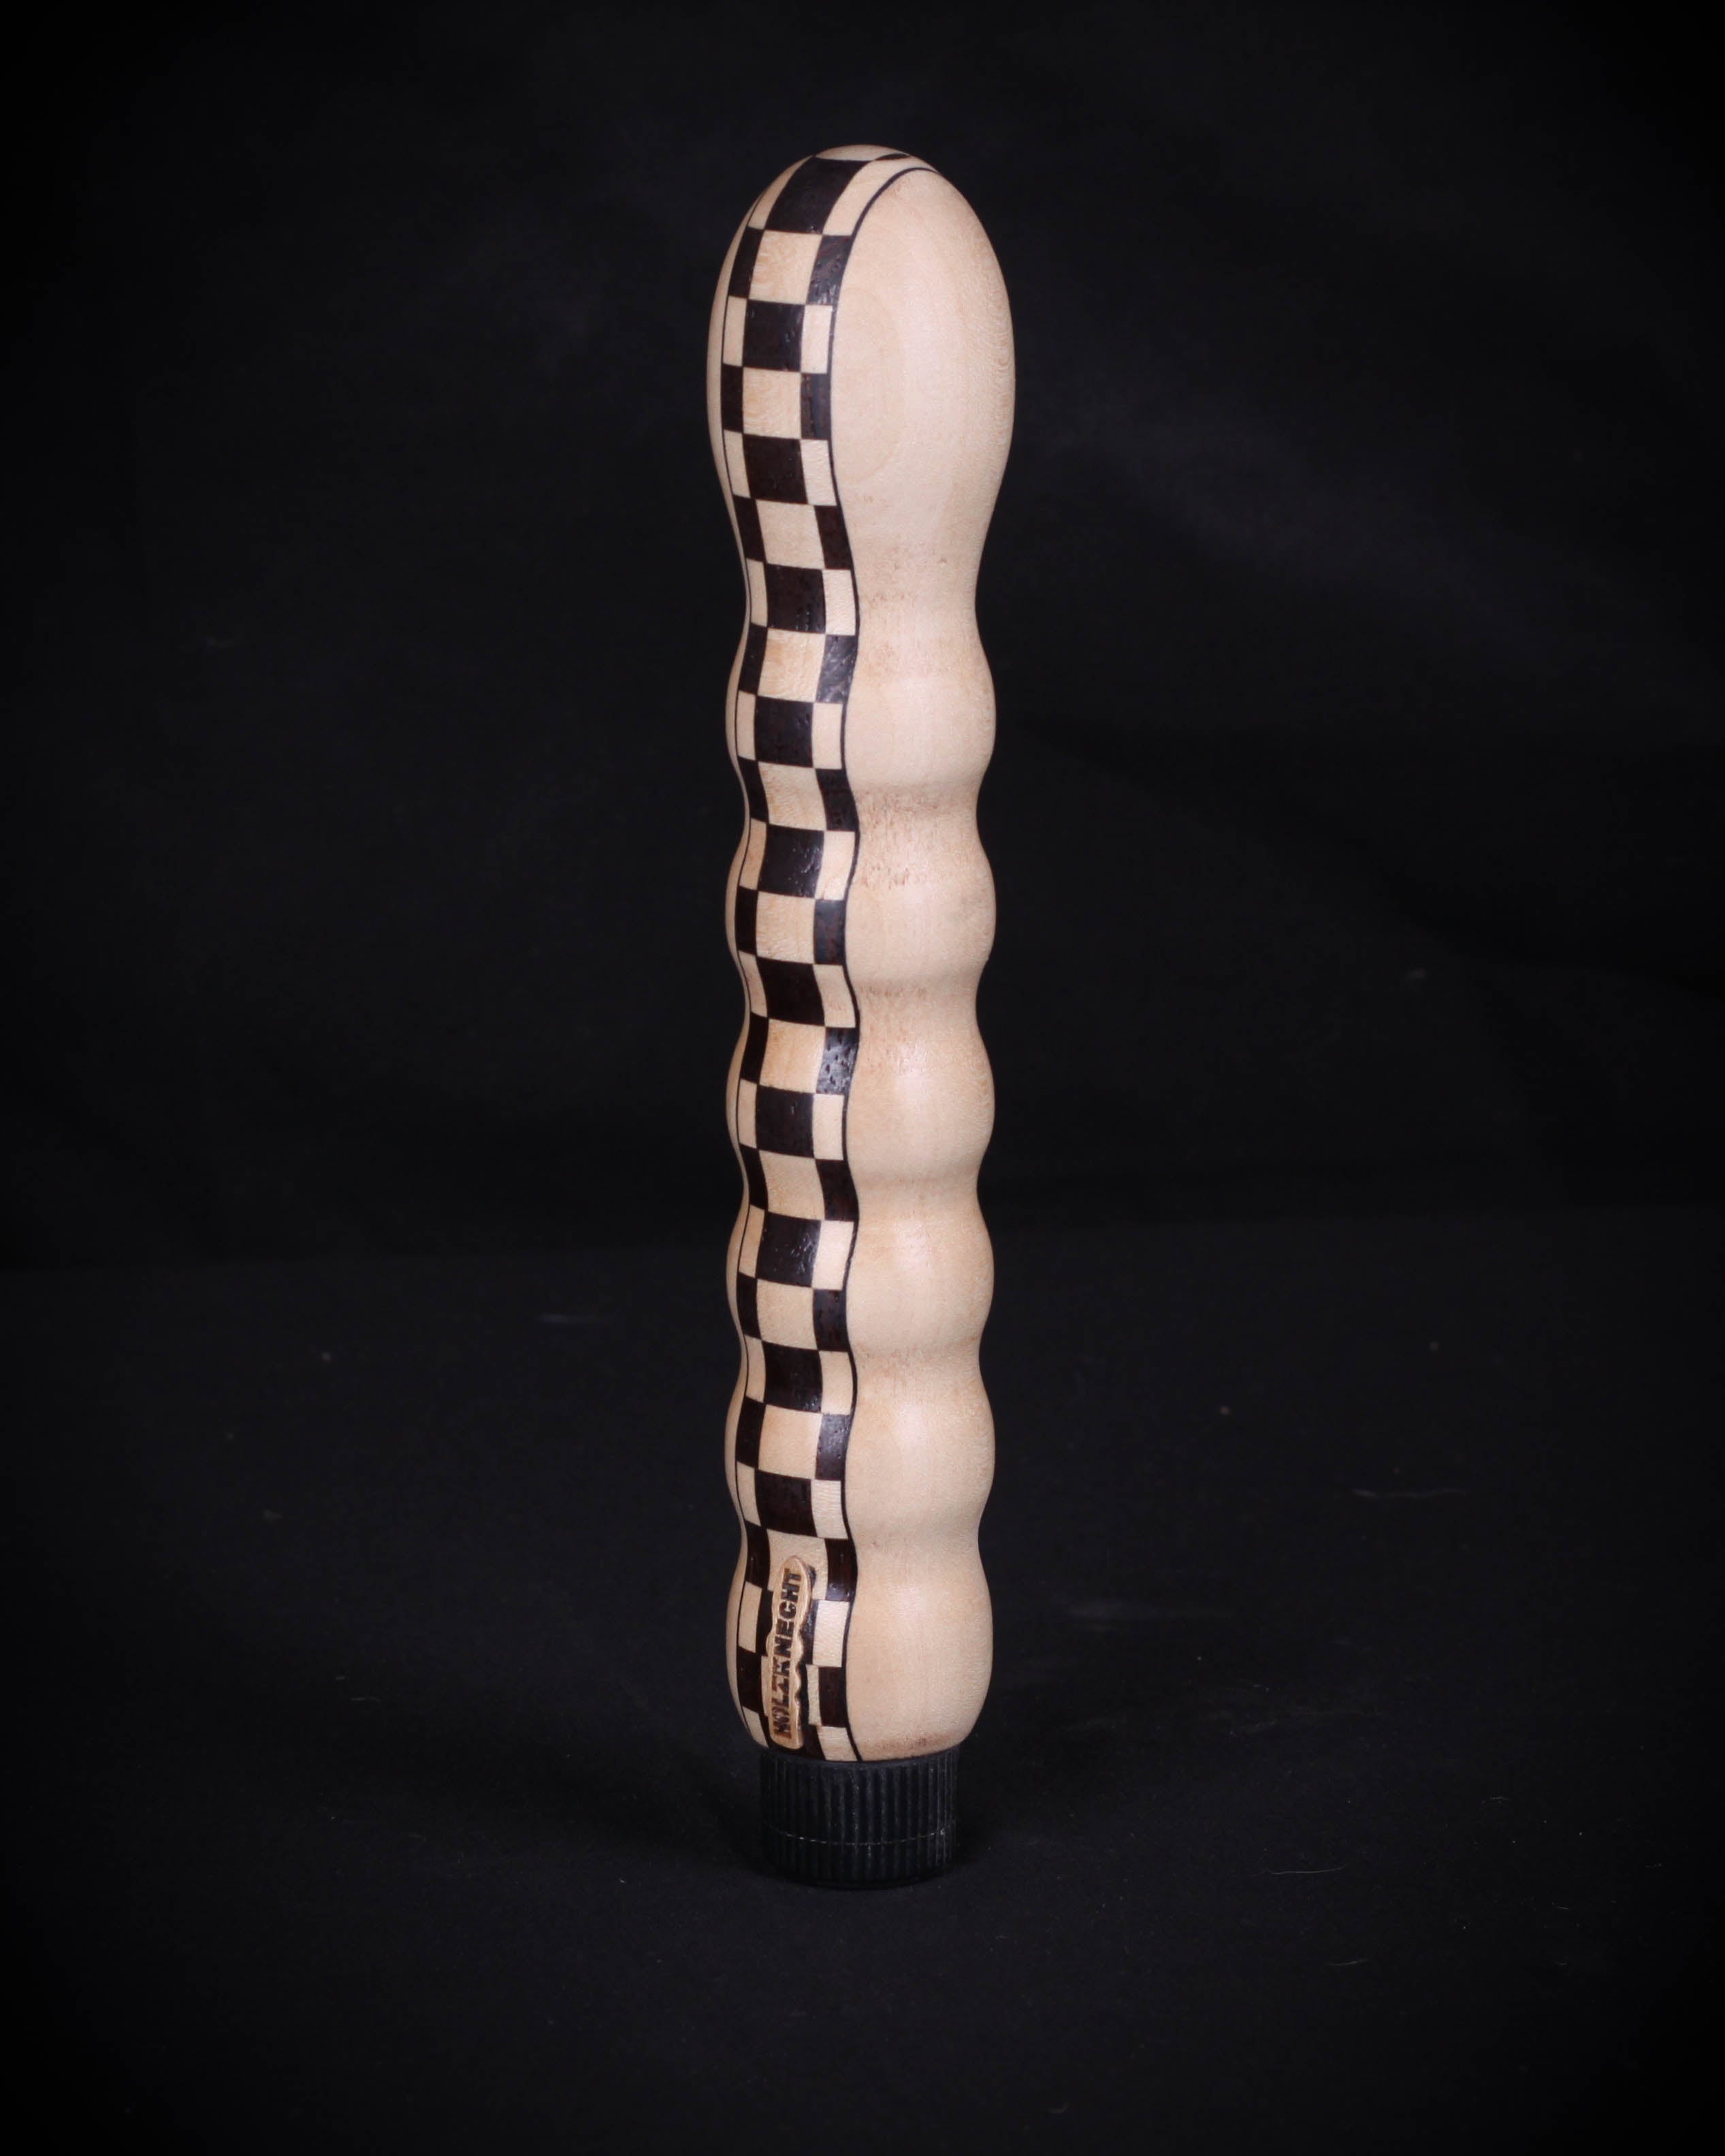 LAUSBUB || Chessy || Holzvibrator || Holzdildo || Sex Toy || Wood Vibrator || handmade by Holz-Knecht.at